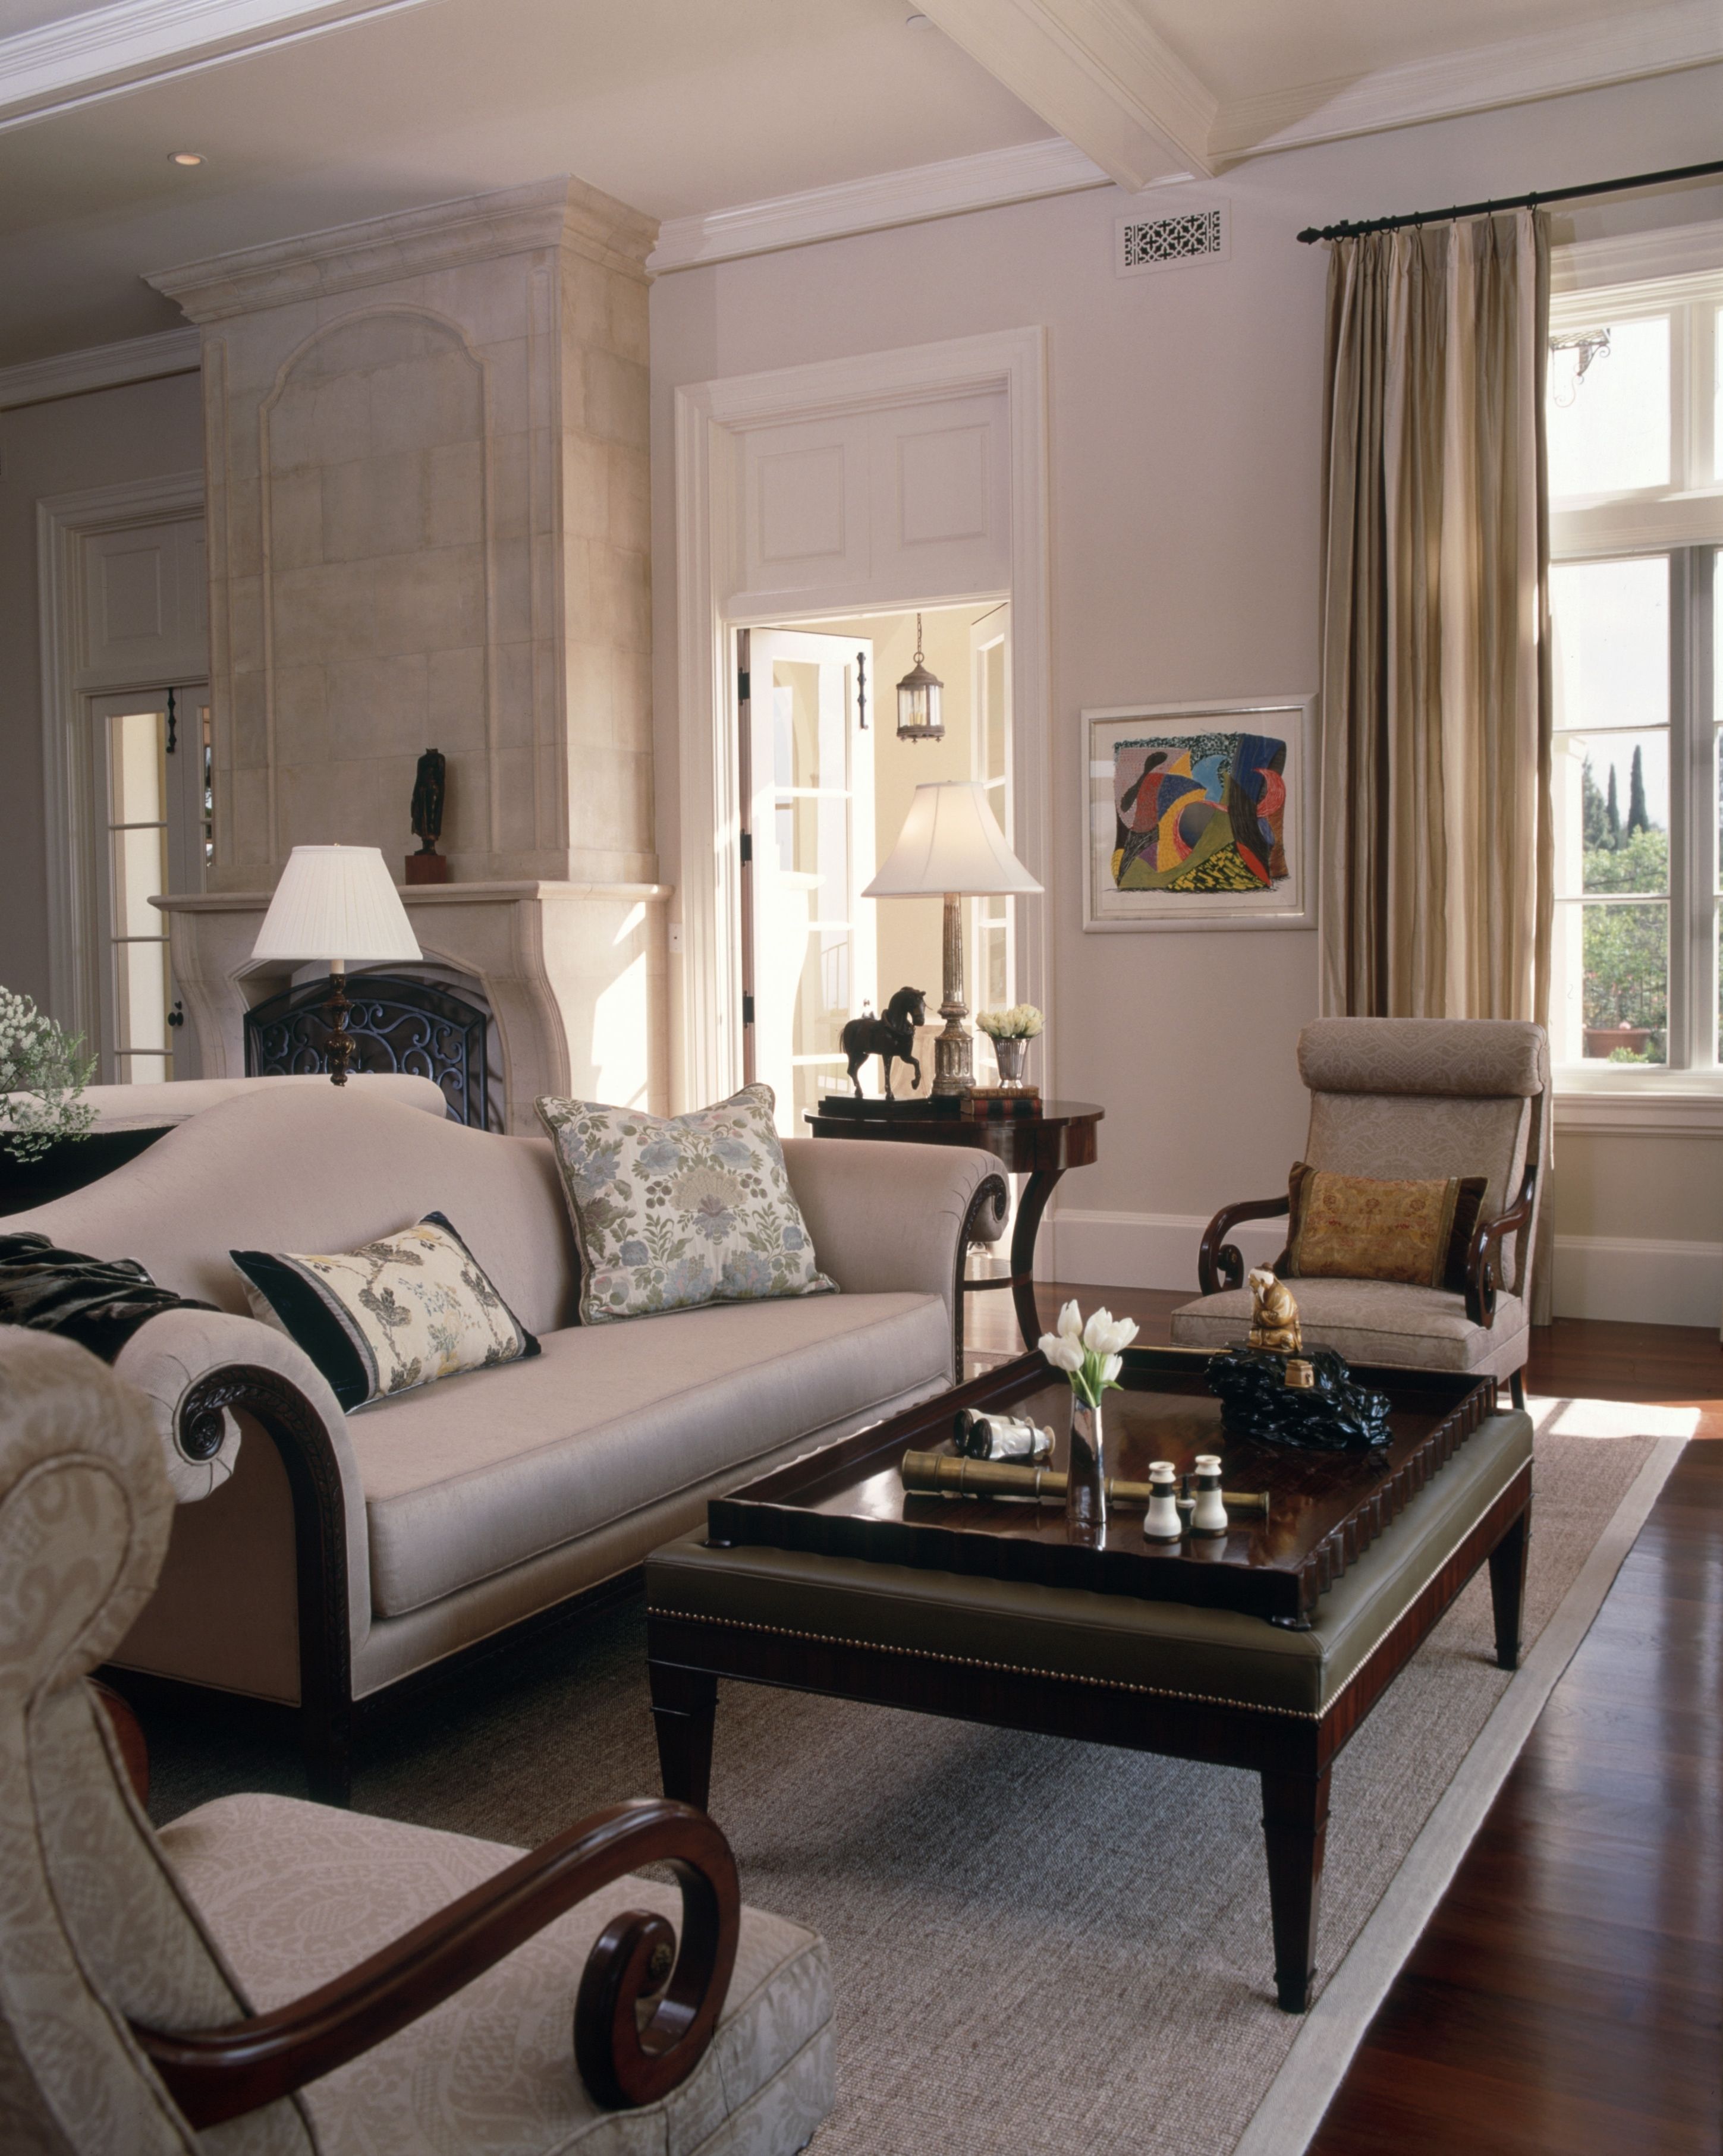 Most Current Formal Living Room Chandelier And Lanternadg Lighting – Adg In Living Room Chandeliers (View 6 of 20)